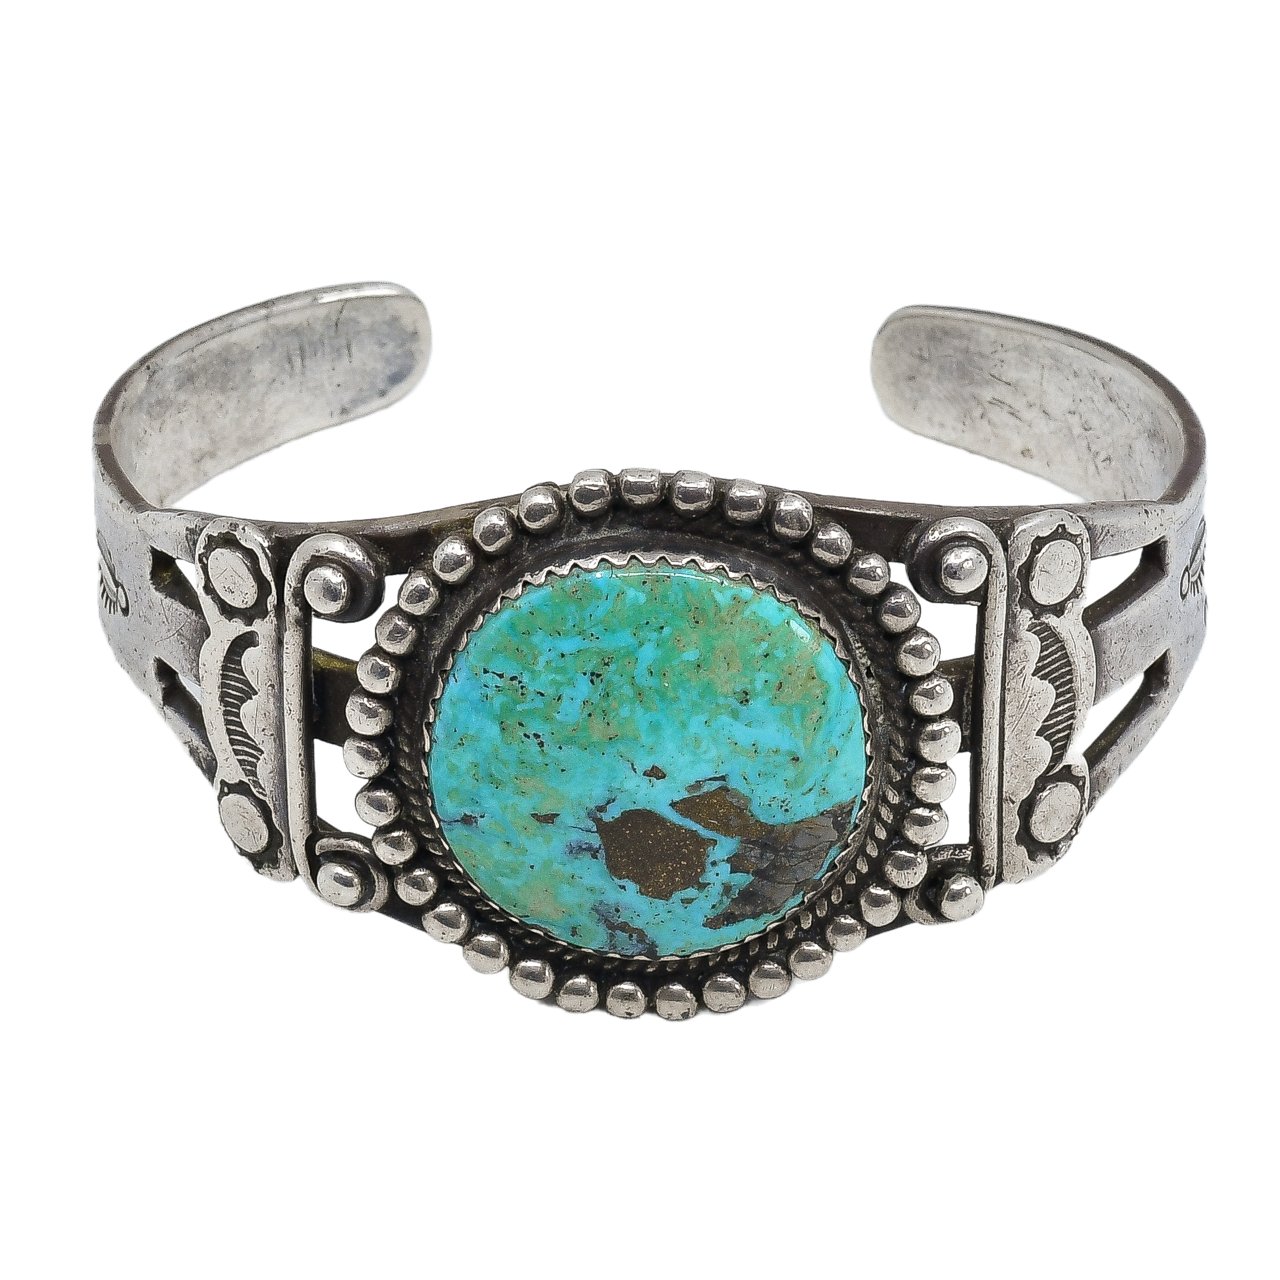 Vintage Navajo Silver Bracelet with Turquoise Circa 1930-1940 - Turquoise & Tufa